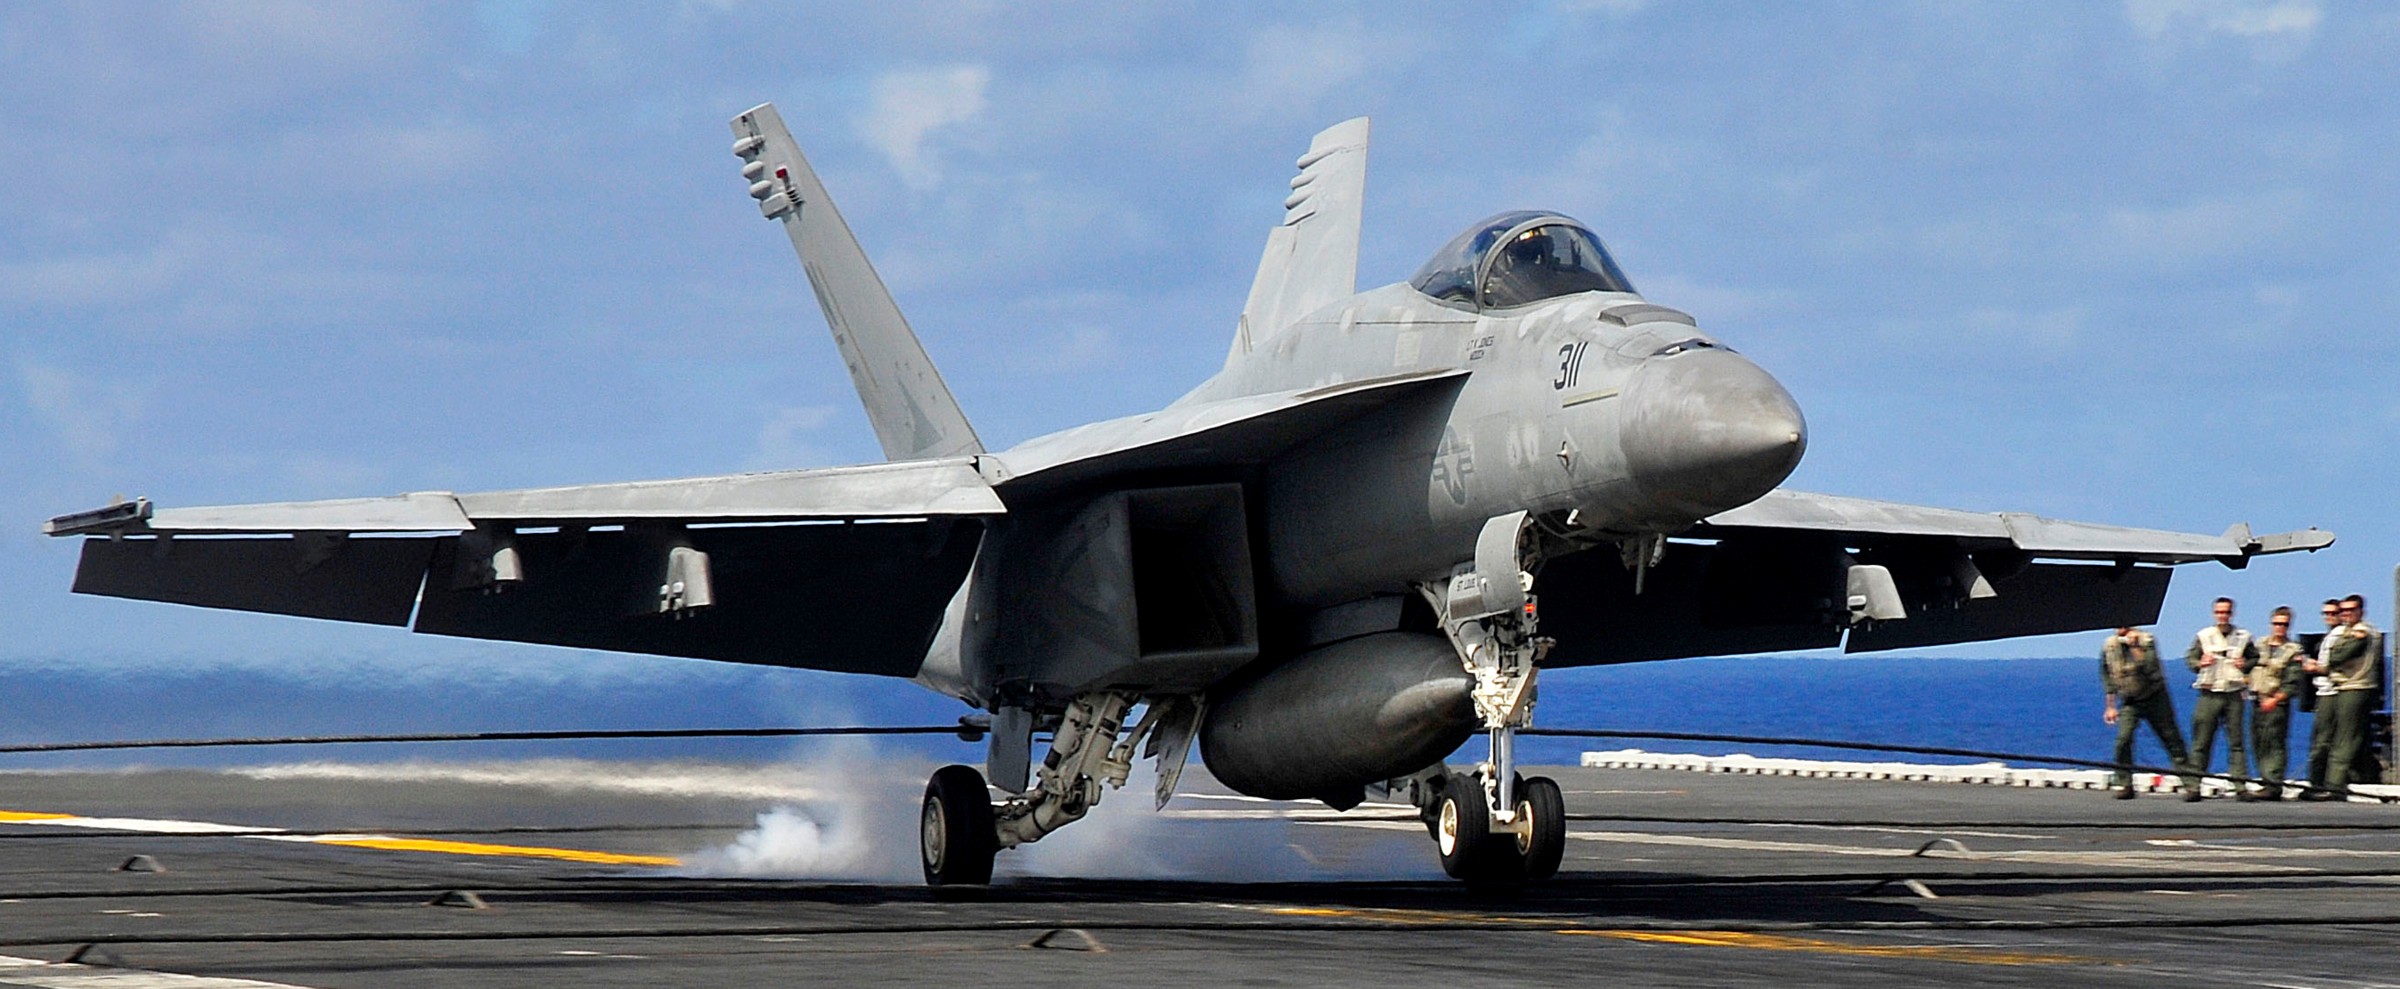 vfa-115 eagles strike fighter squadron f/a-18e super hornet cvw-5 uss george washington cvn-73 2012 37